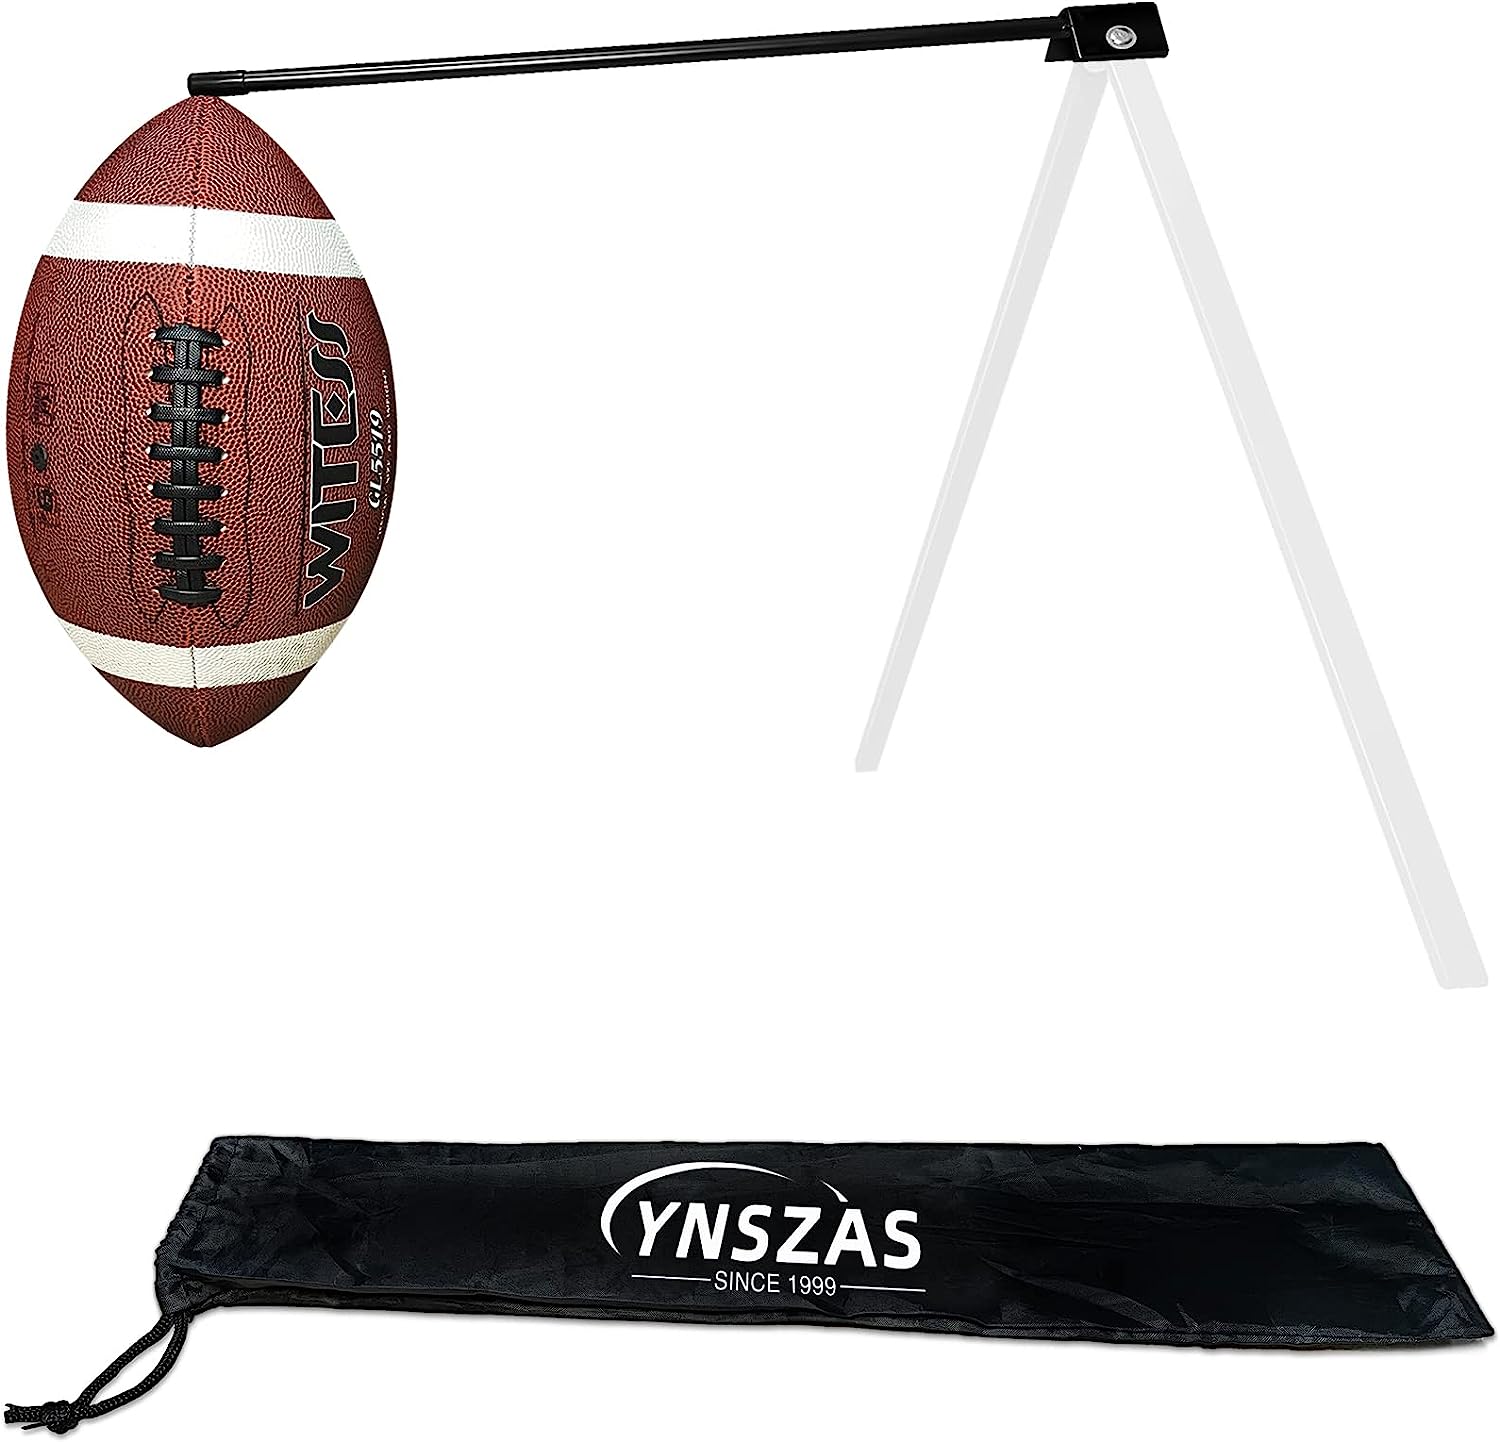 YNSZAS   Football Kicking Tee, Portable Field Goal [...]